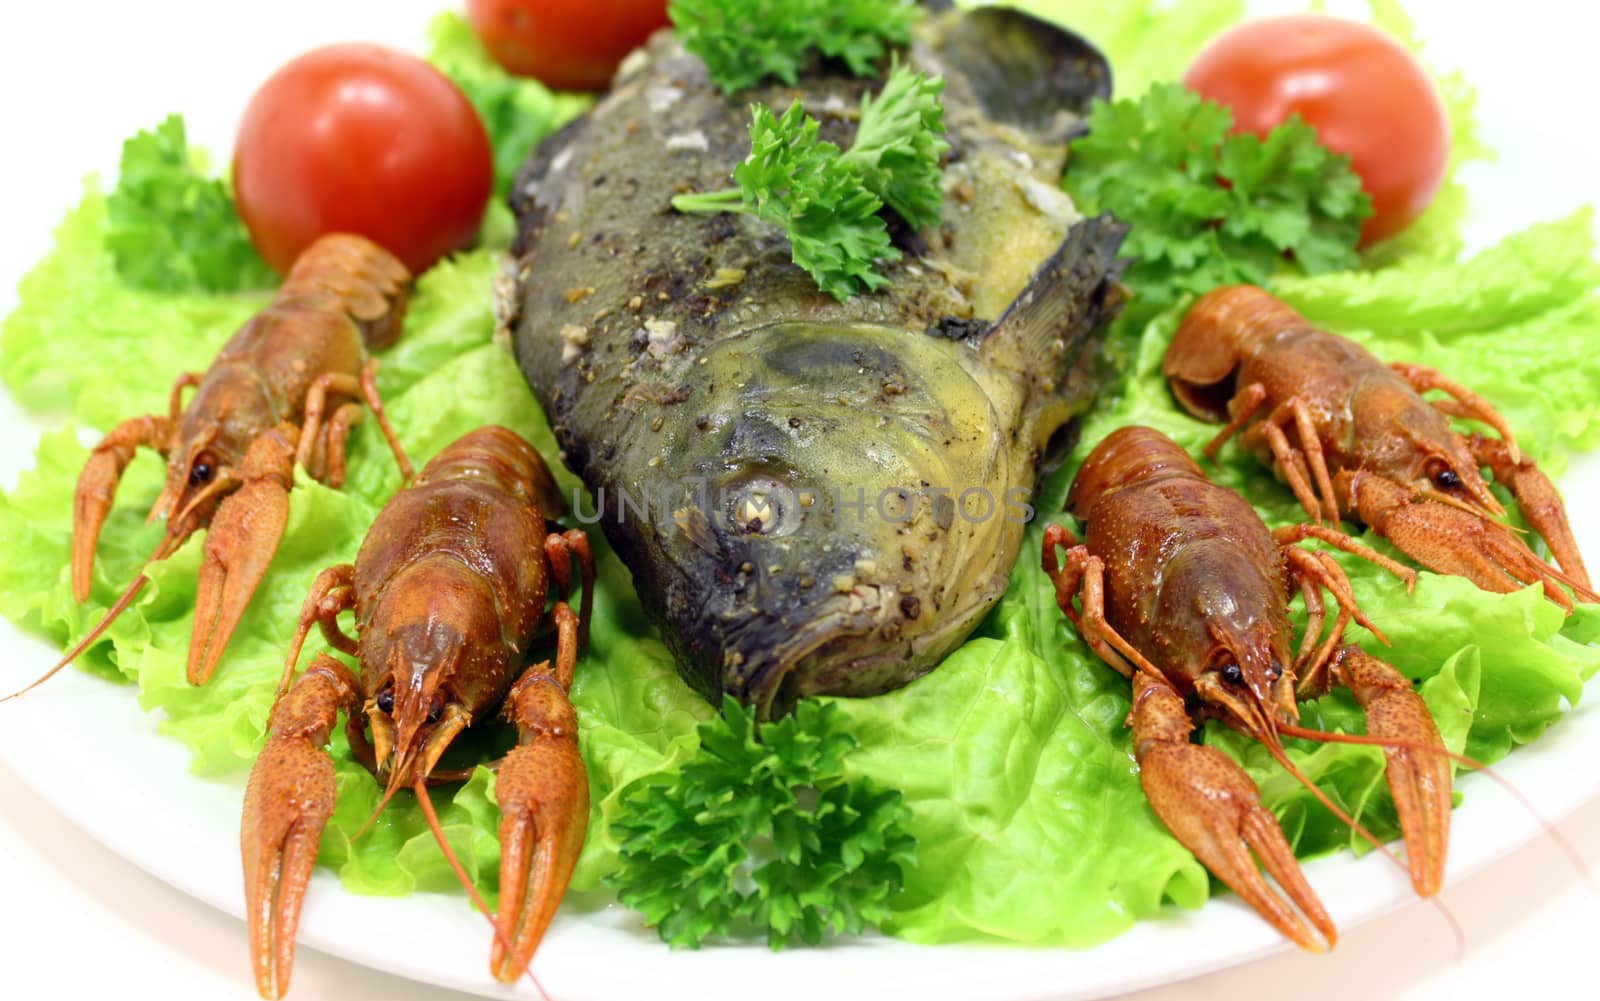 Dish with crayfish smoked fish,salad and tomato